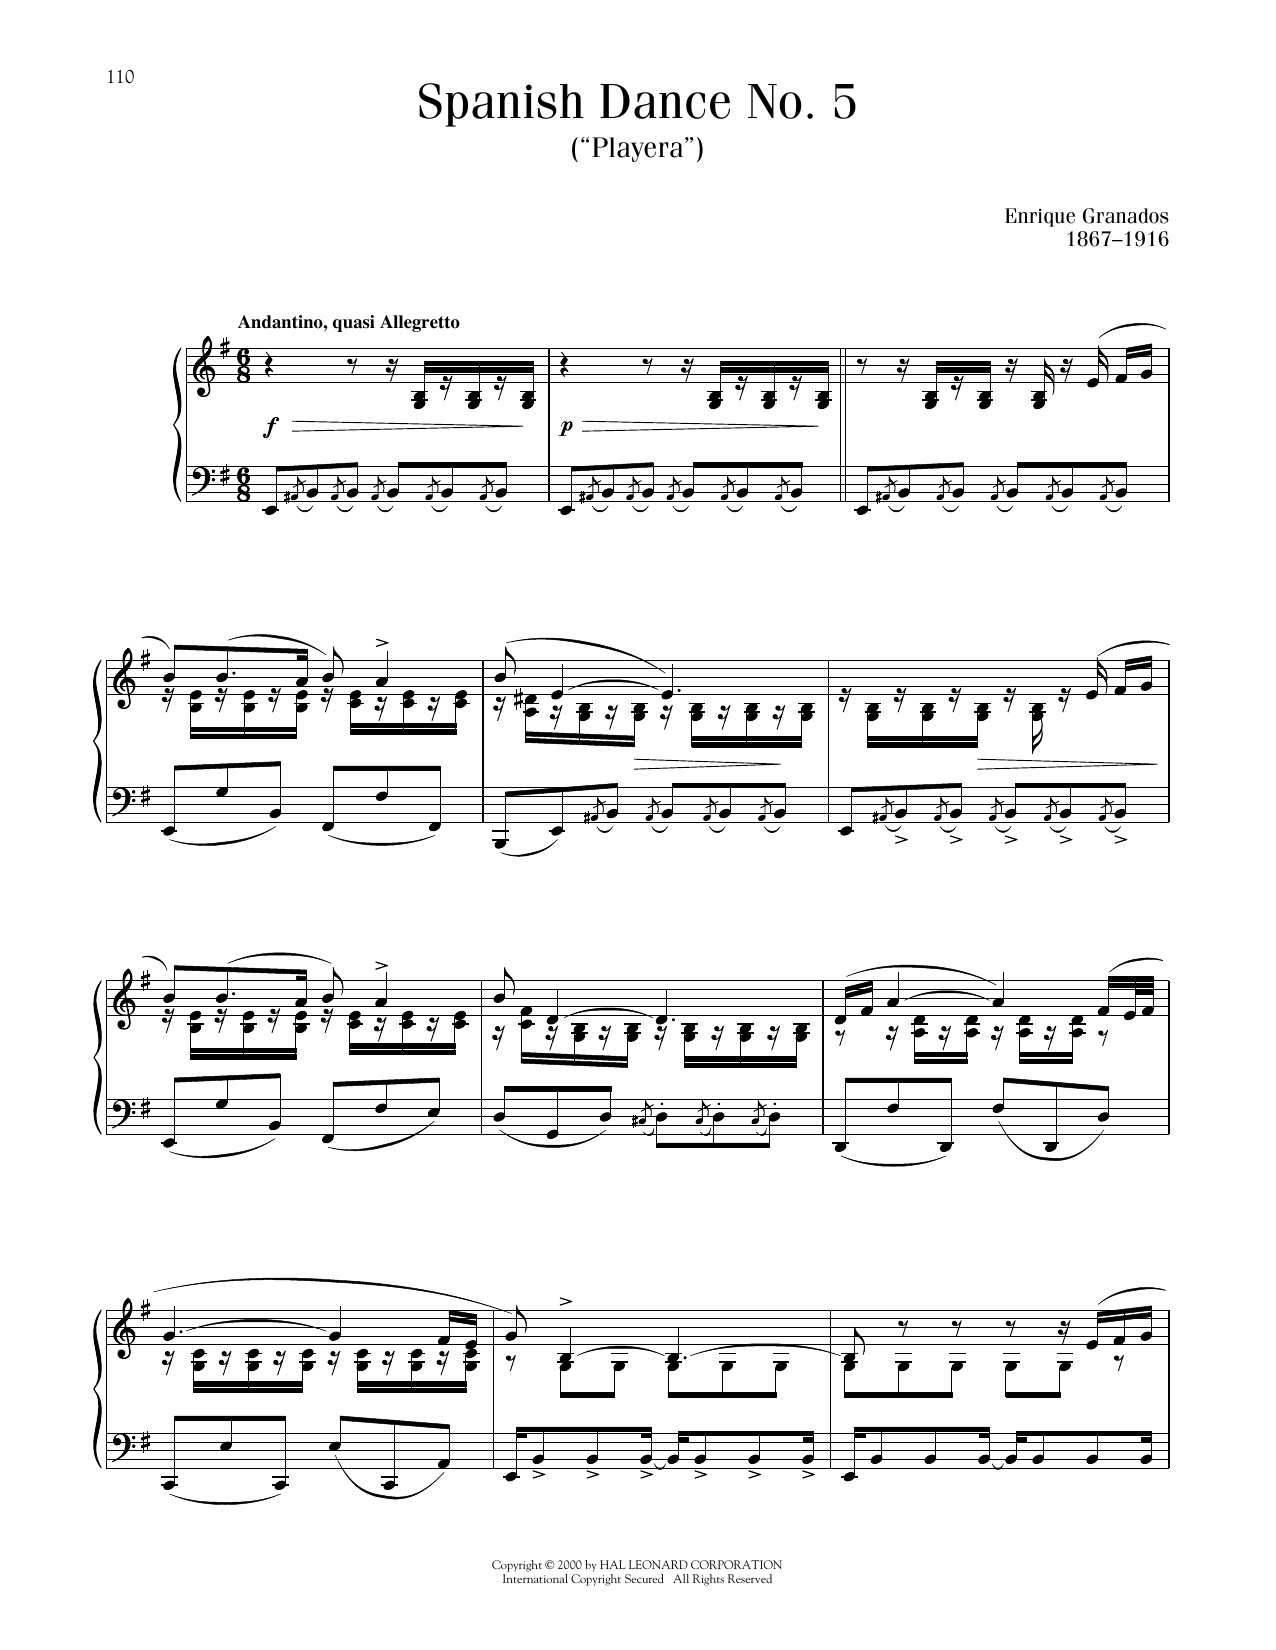 Enrique Granados Playera, Op. 5, No. 5 sheet music notes and chords arranged for Piano Solo